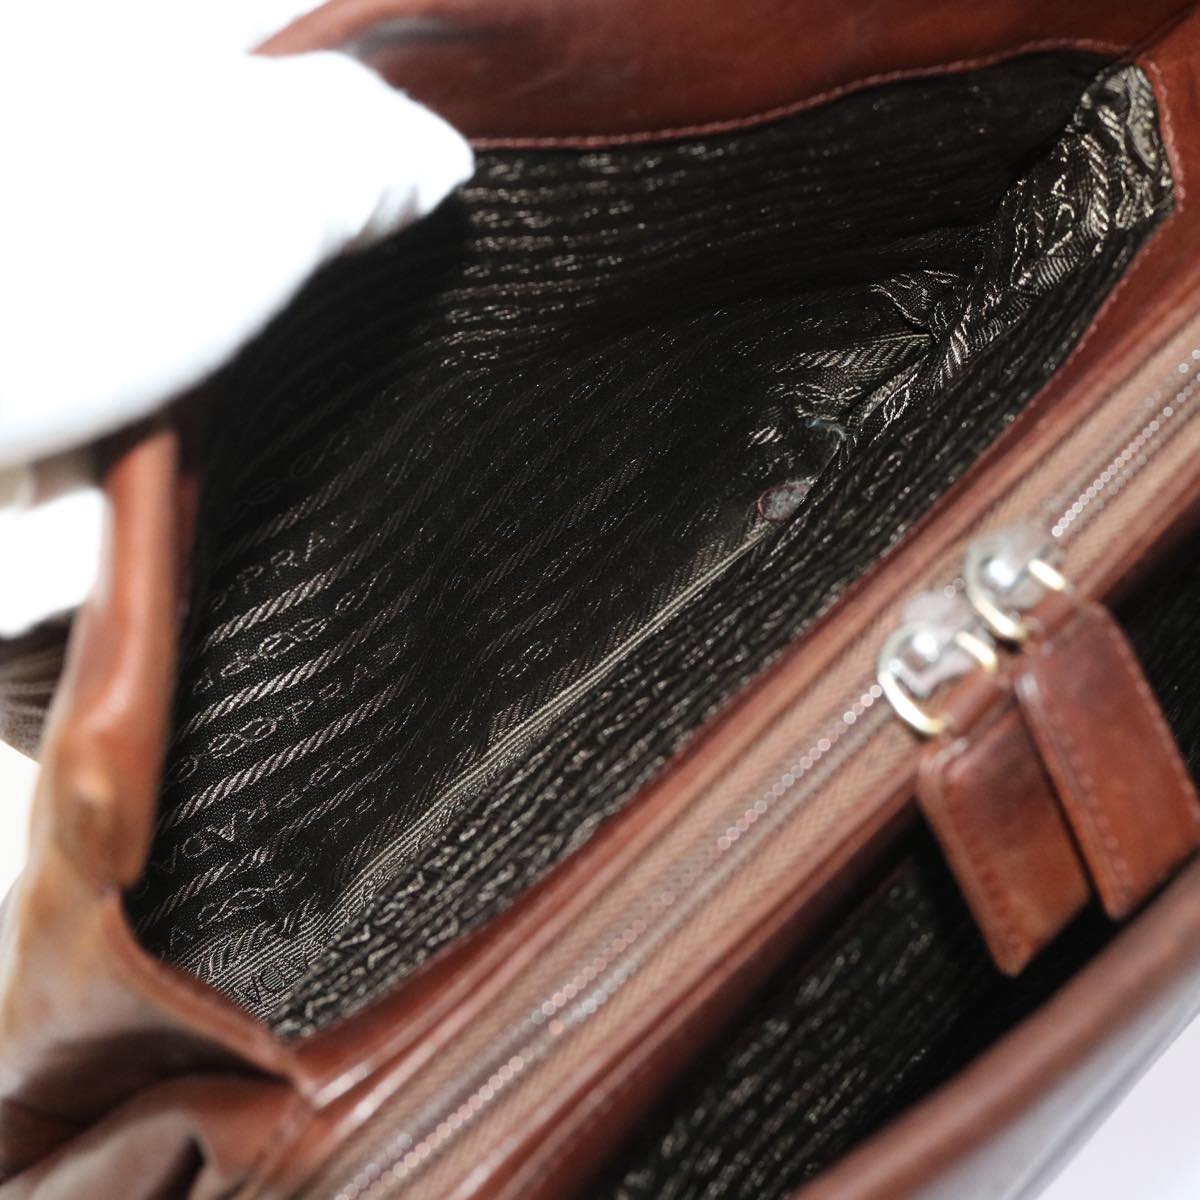 PRADA Shoulder Bag Leather Brown Auth bs7171